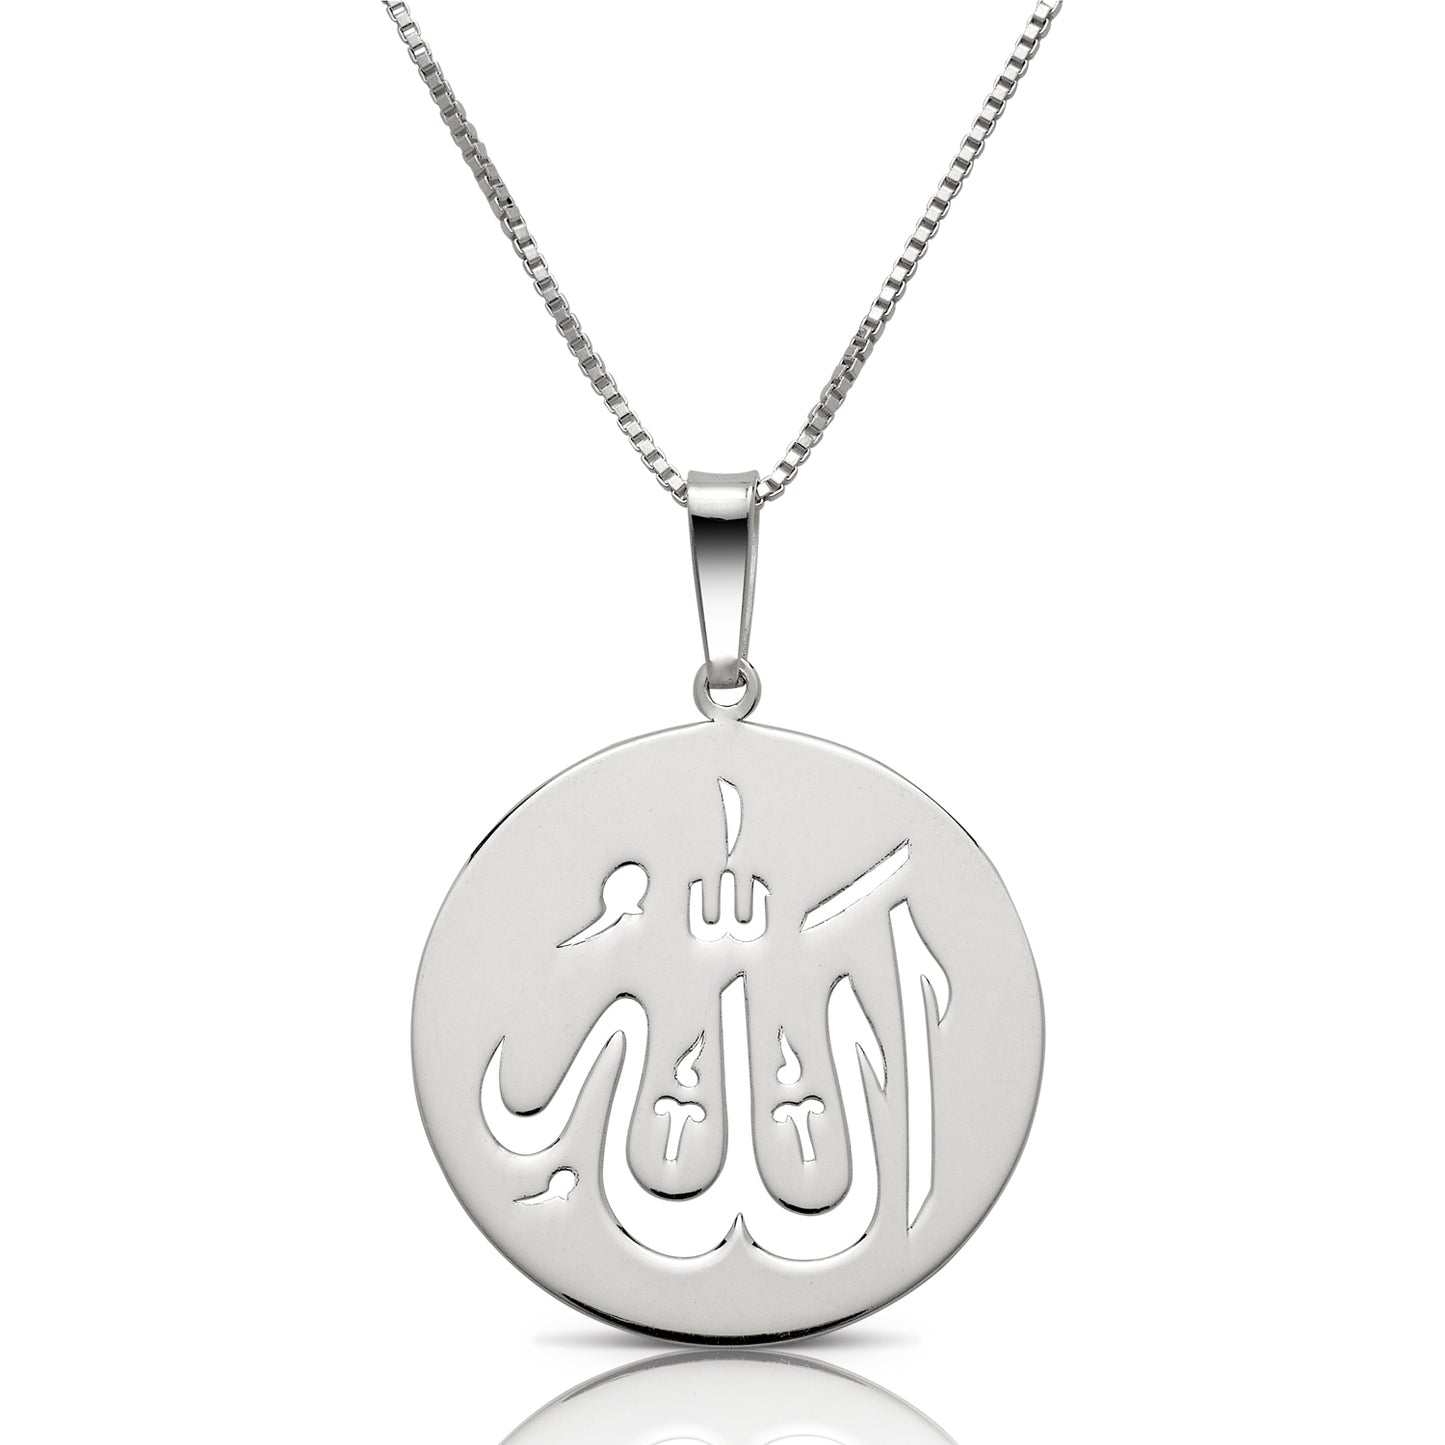 Allah round plate pendant w. box chain .925 sterling silver - Betterjewelry